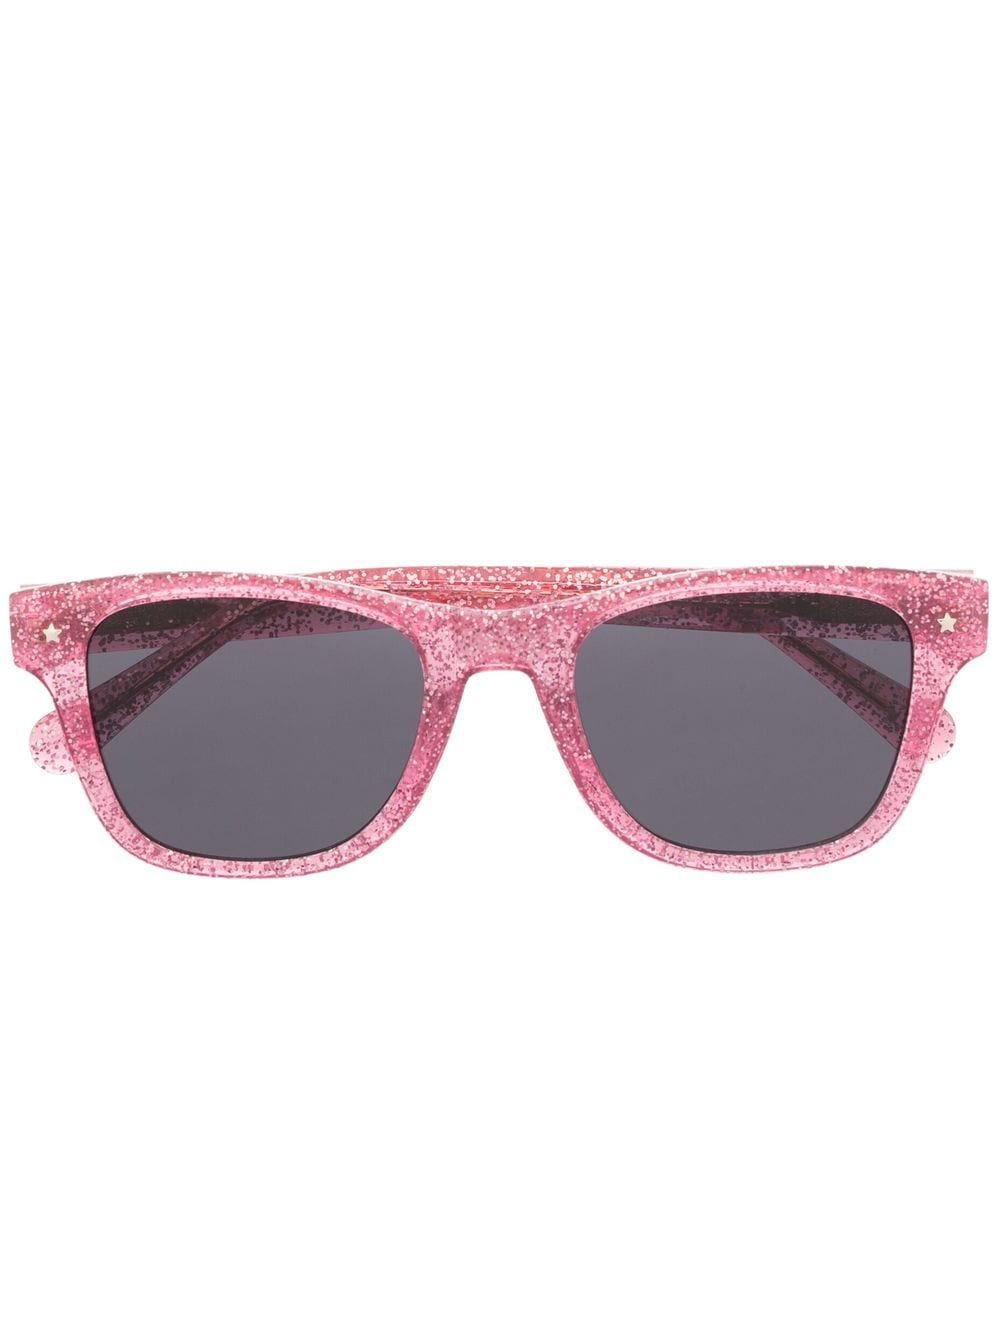 Chiara Ferragni CF 1006/S square-frame sunglasses - Pink von Chiara Ferragni